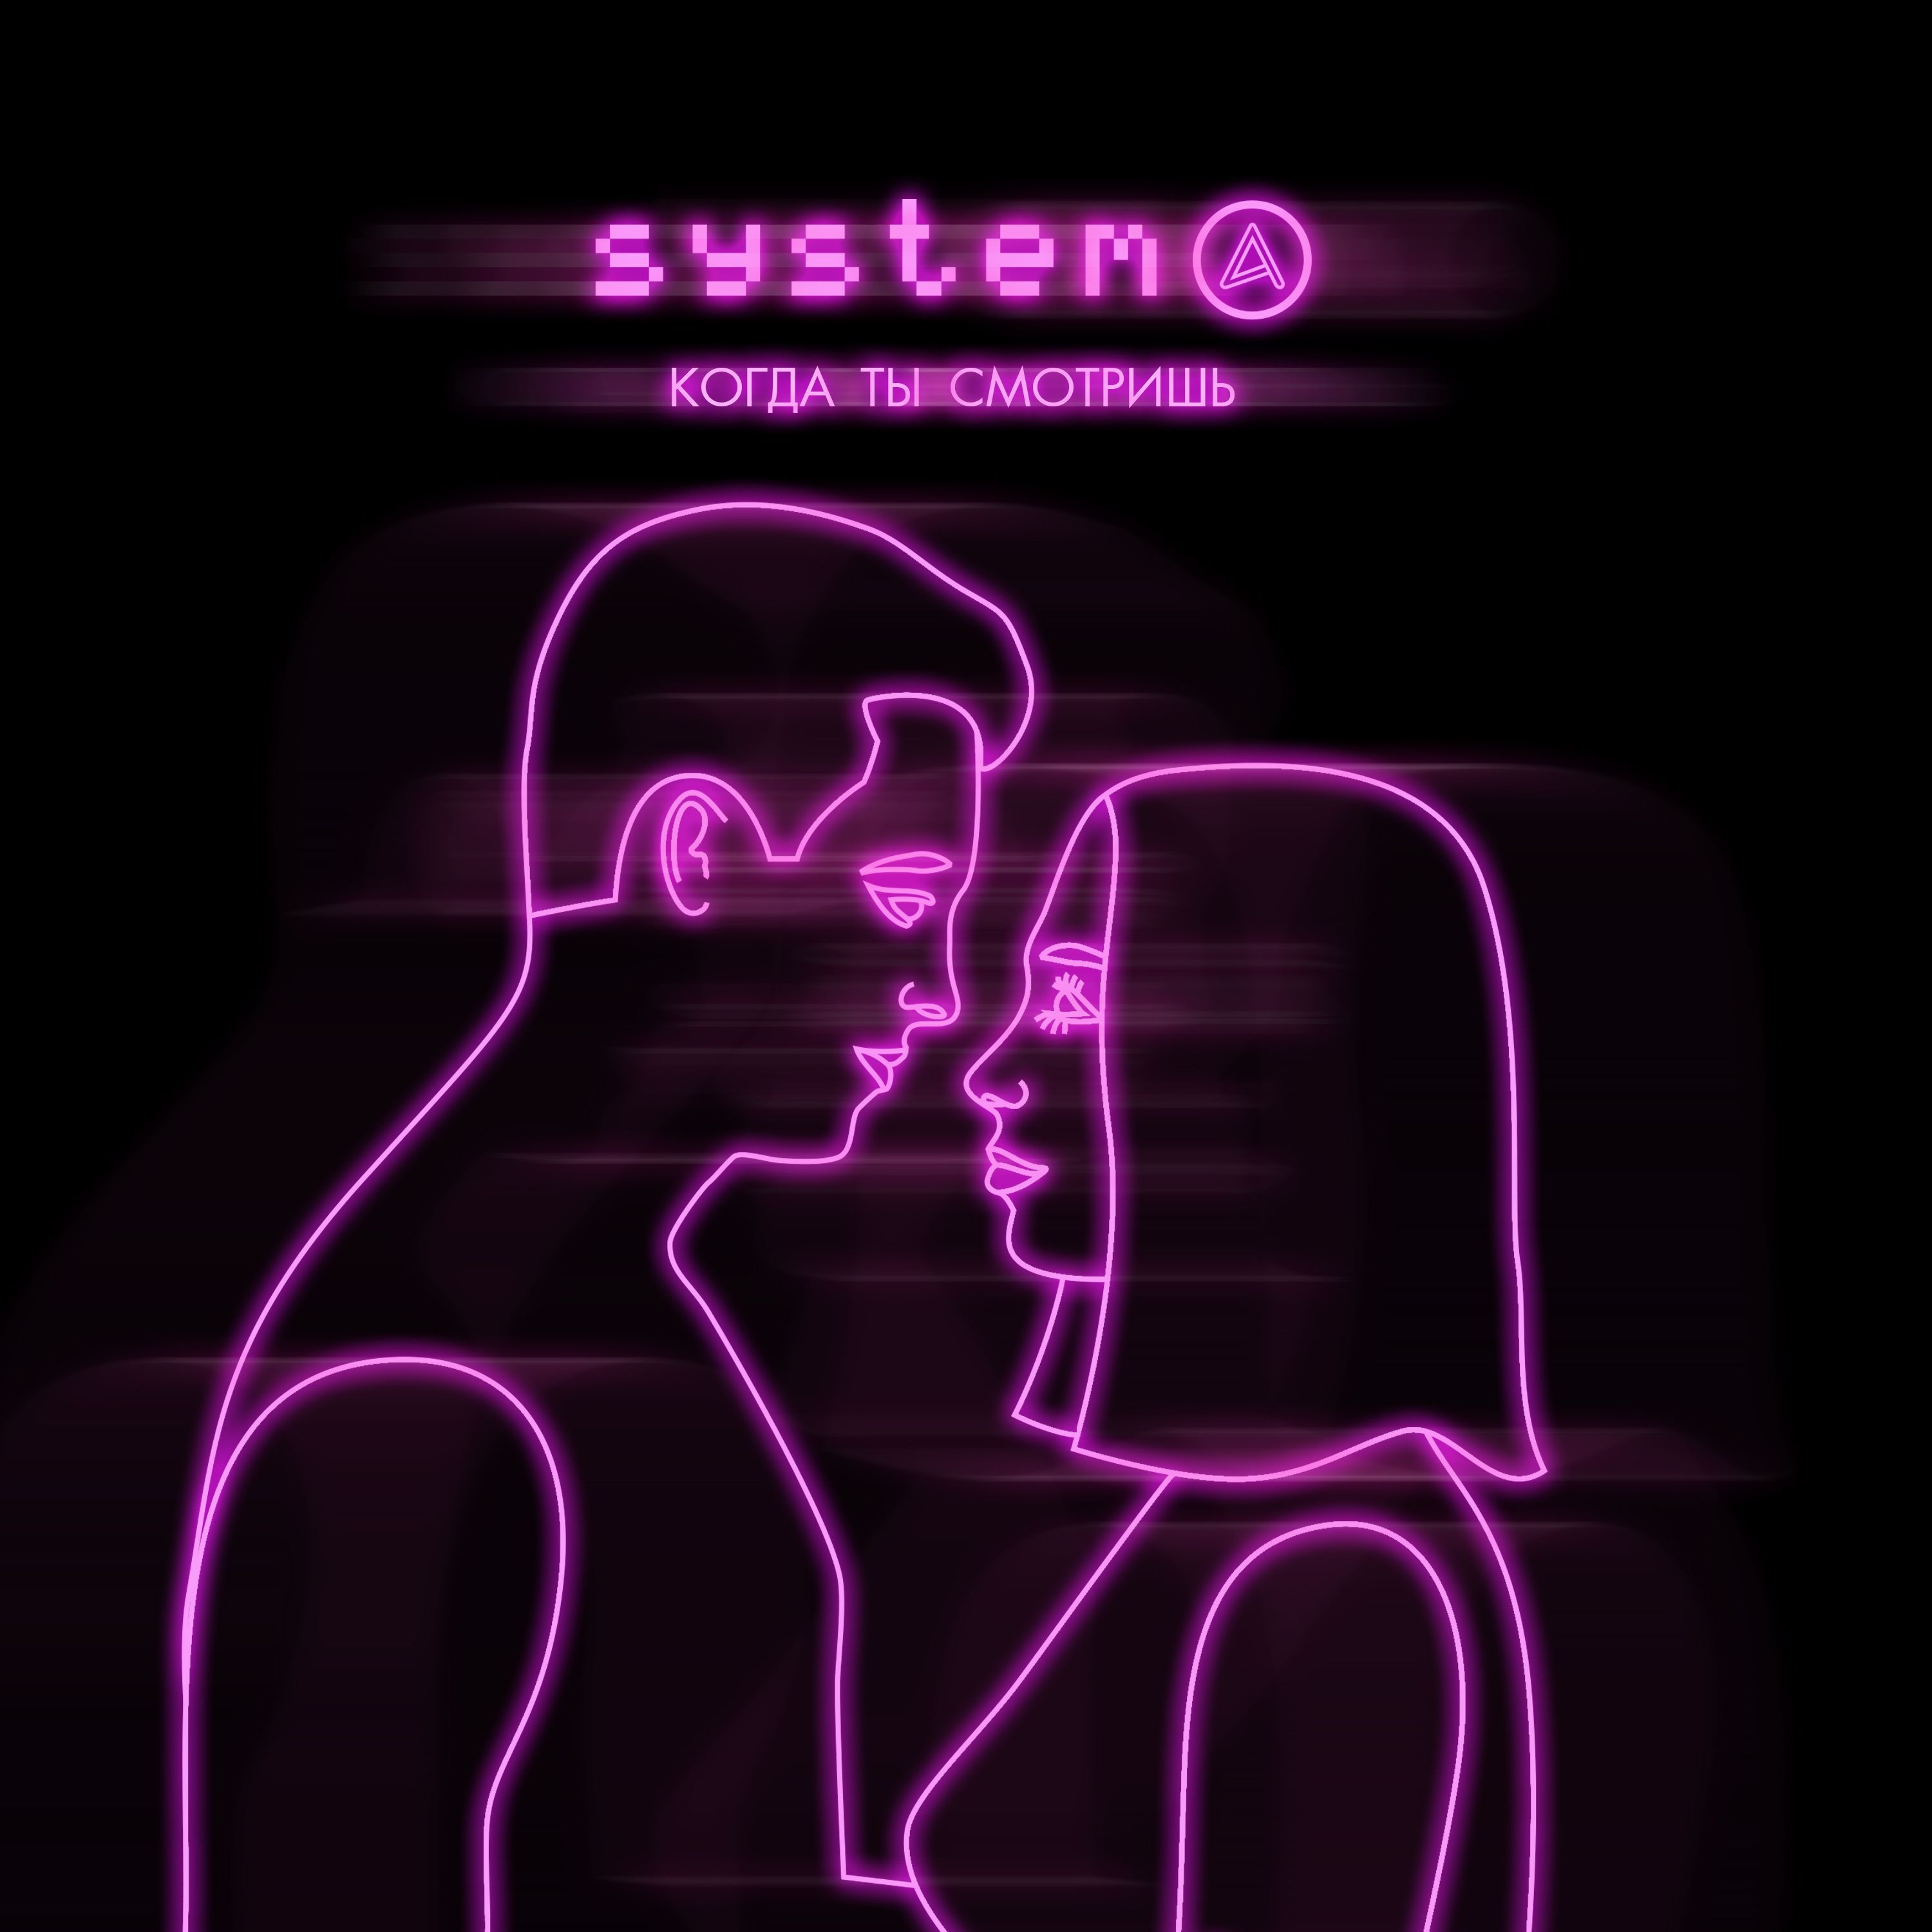 Prenesi Systema - Когда ты смотришь